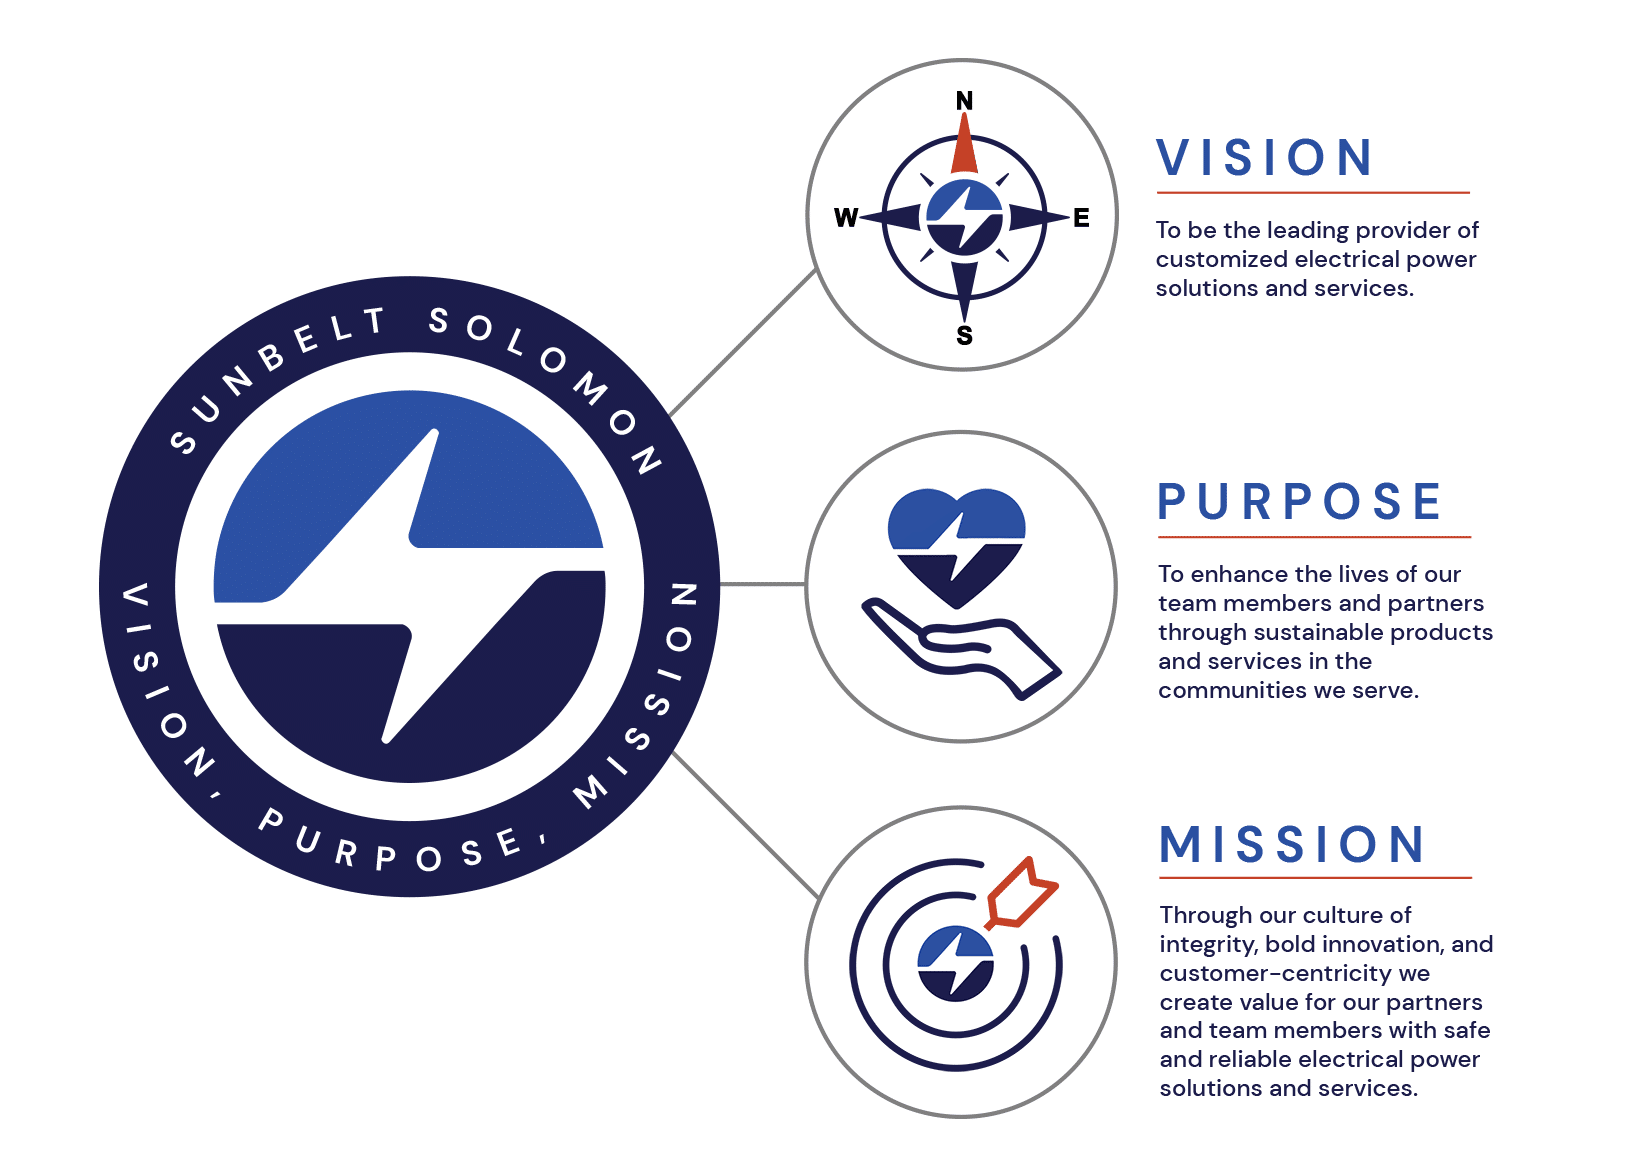 Sunbelt Solomon - Vision, Purpose, & Mission